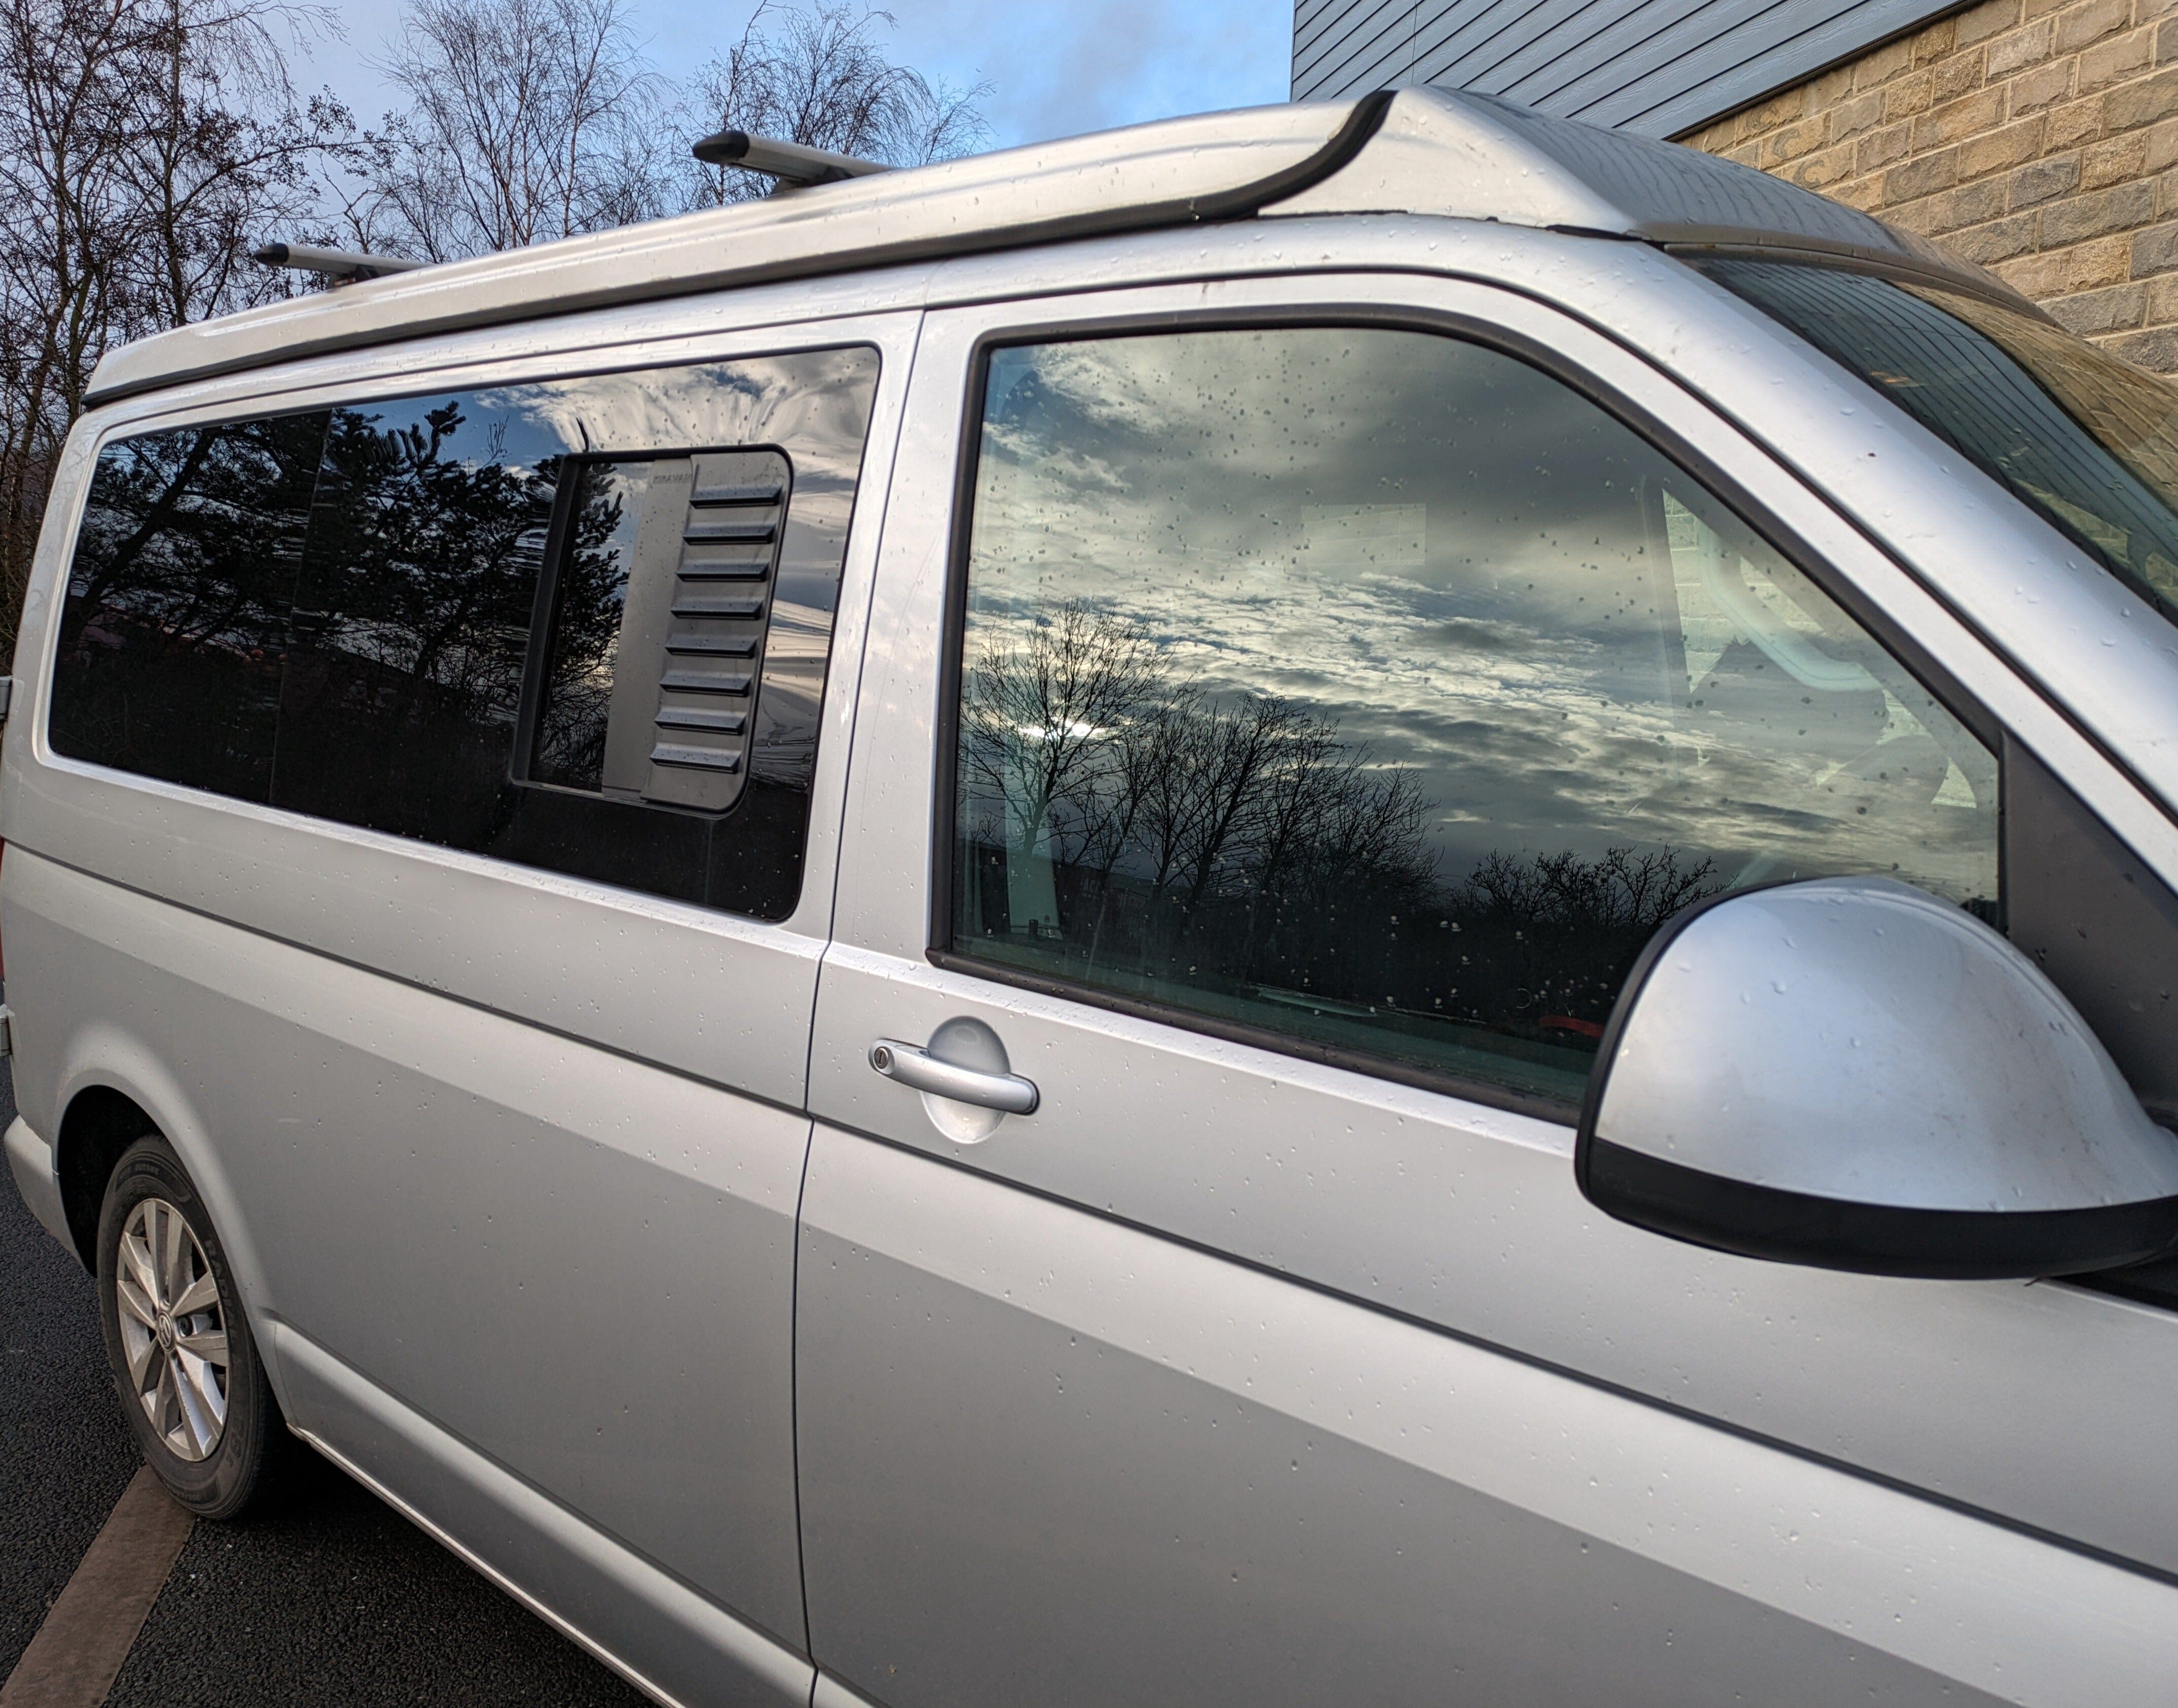 Kiravans Window Vent for VW T5/6 (Right Opening Window) Kiravans 